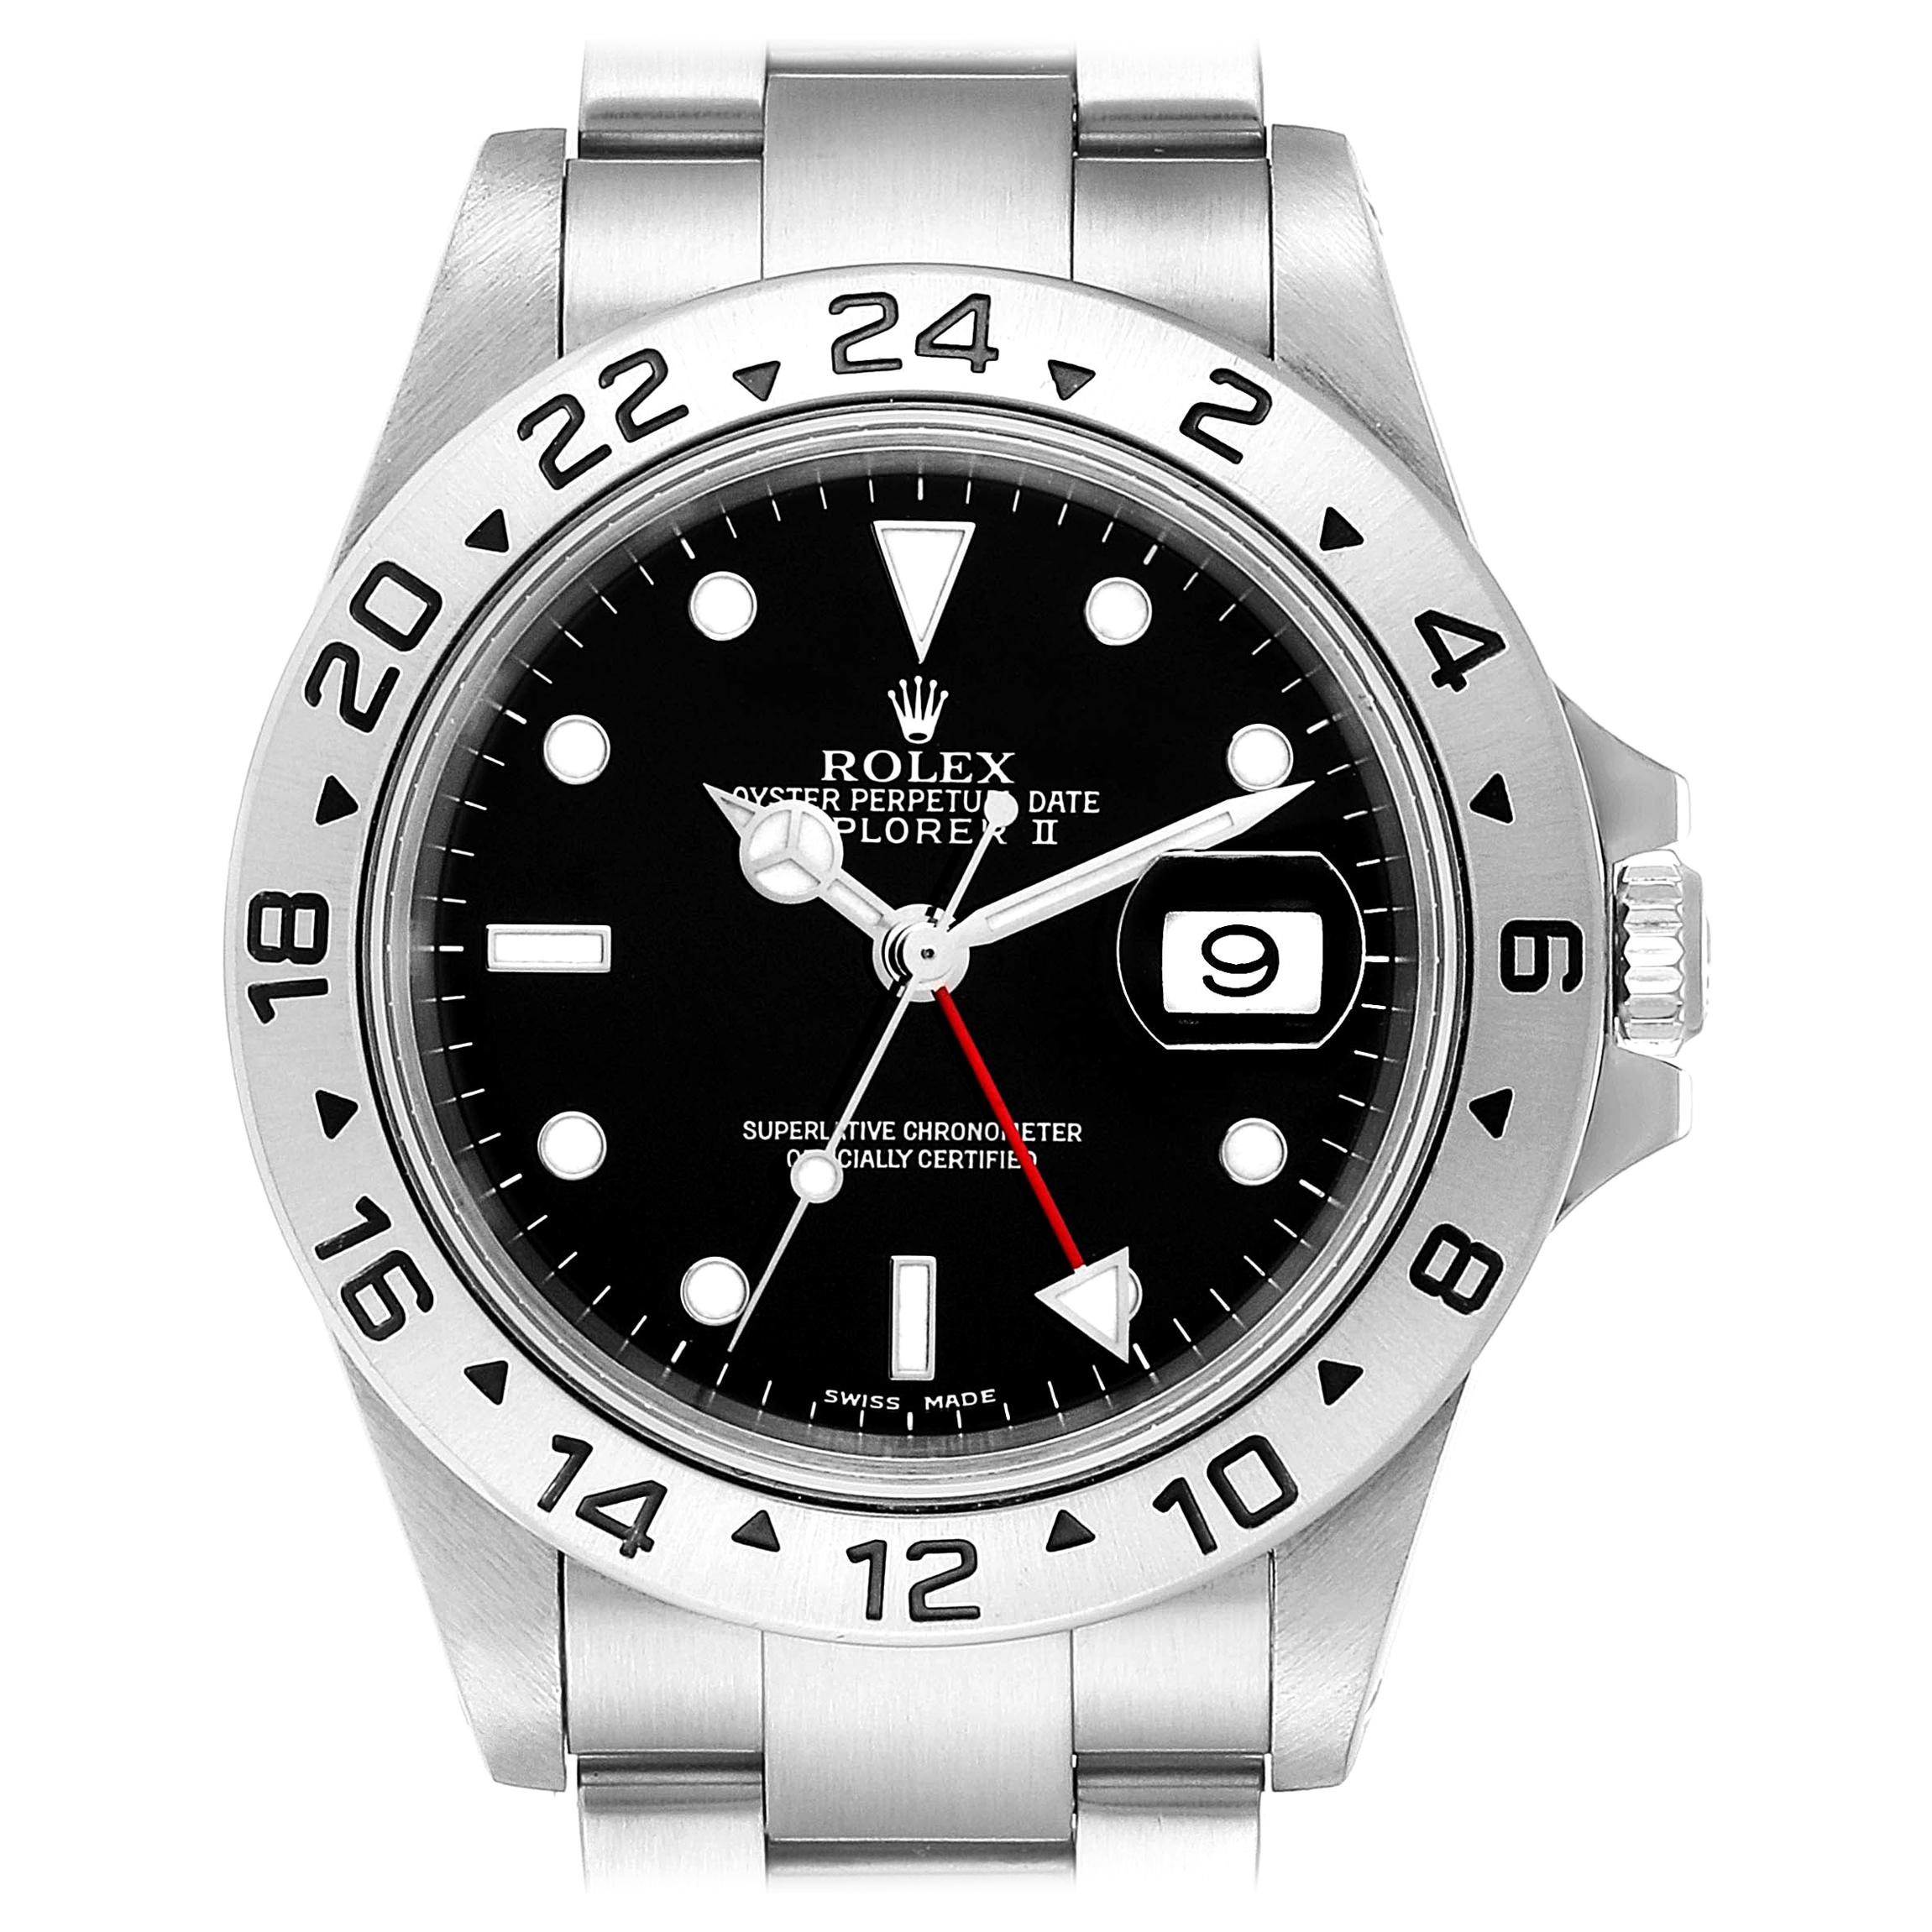 Rolex Explorer II Black Dial Automatic Steel Men's Watch 16570 Box Papers